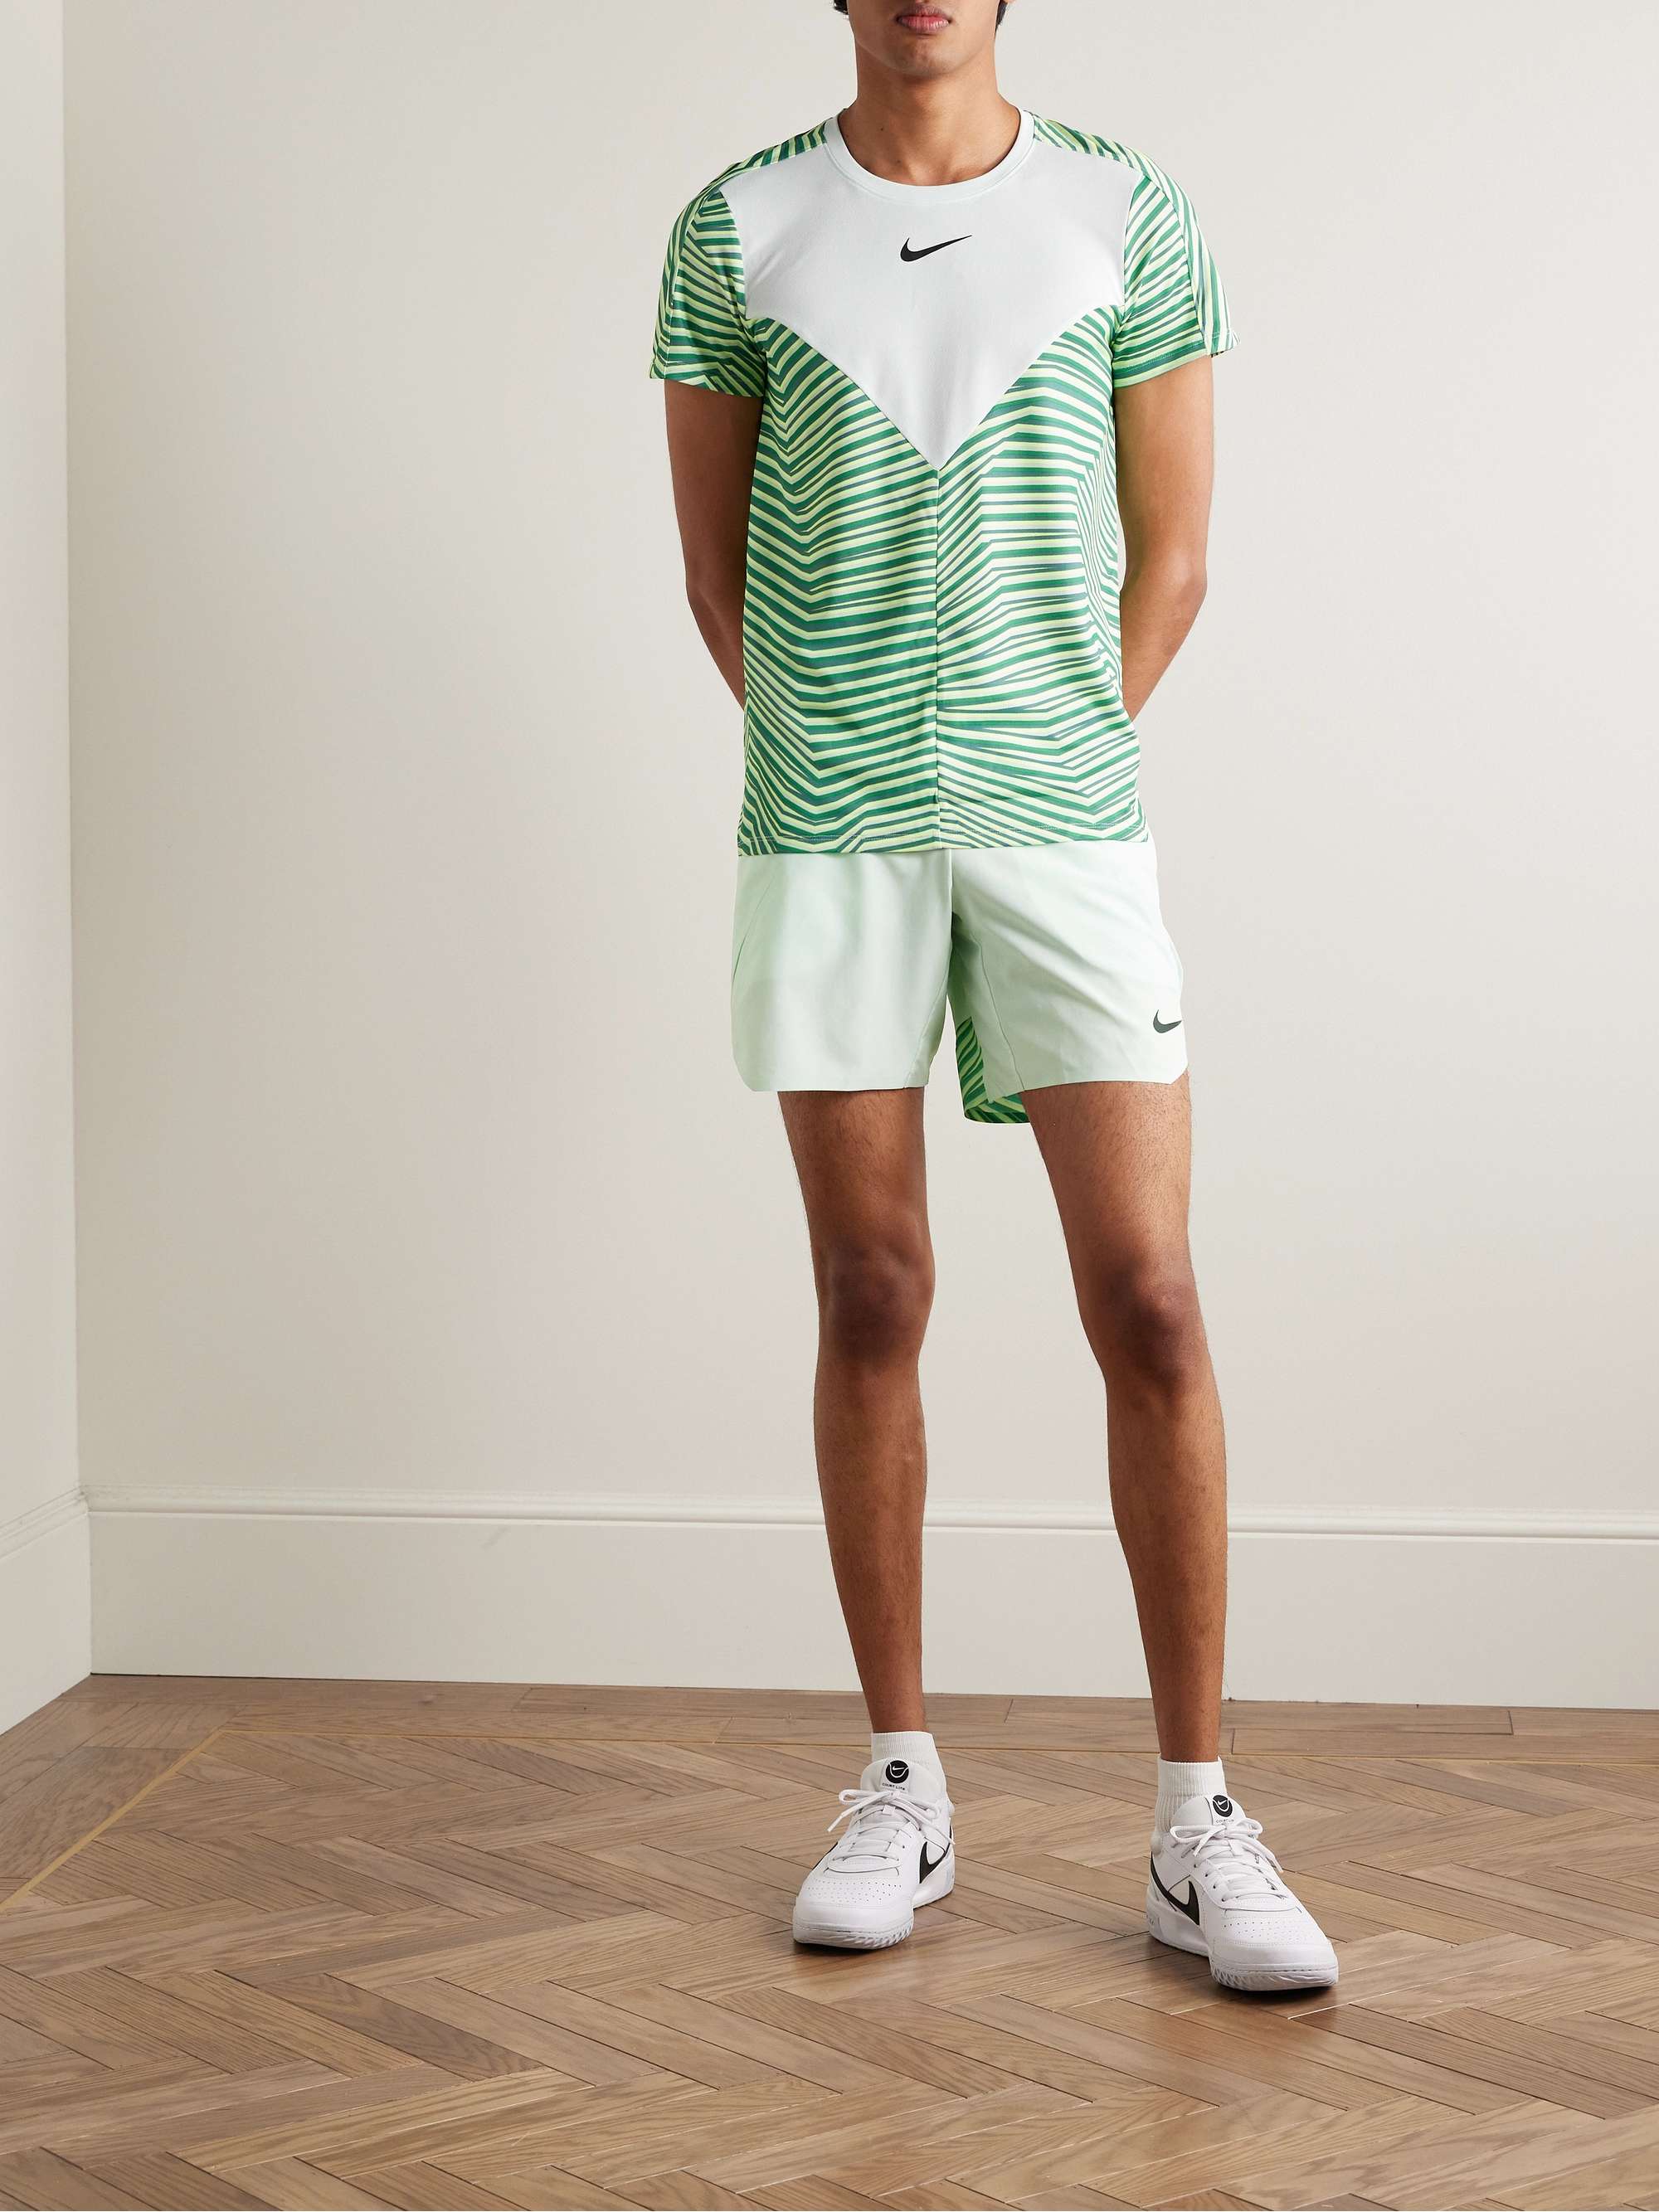 NWT Nike Men's Dri-Fit White Tennis Shorts - Standard Fit Size XL